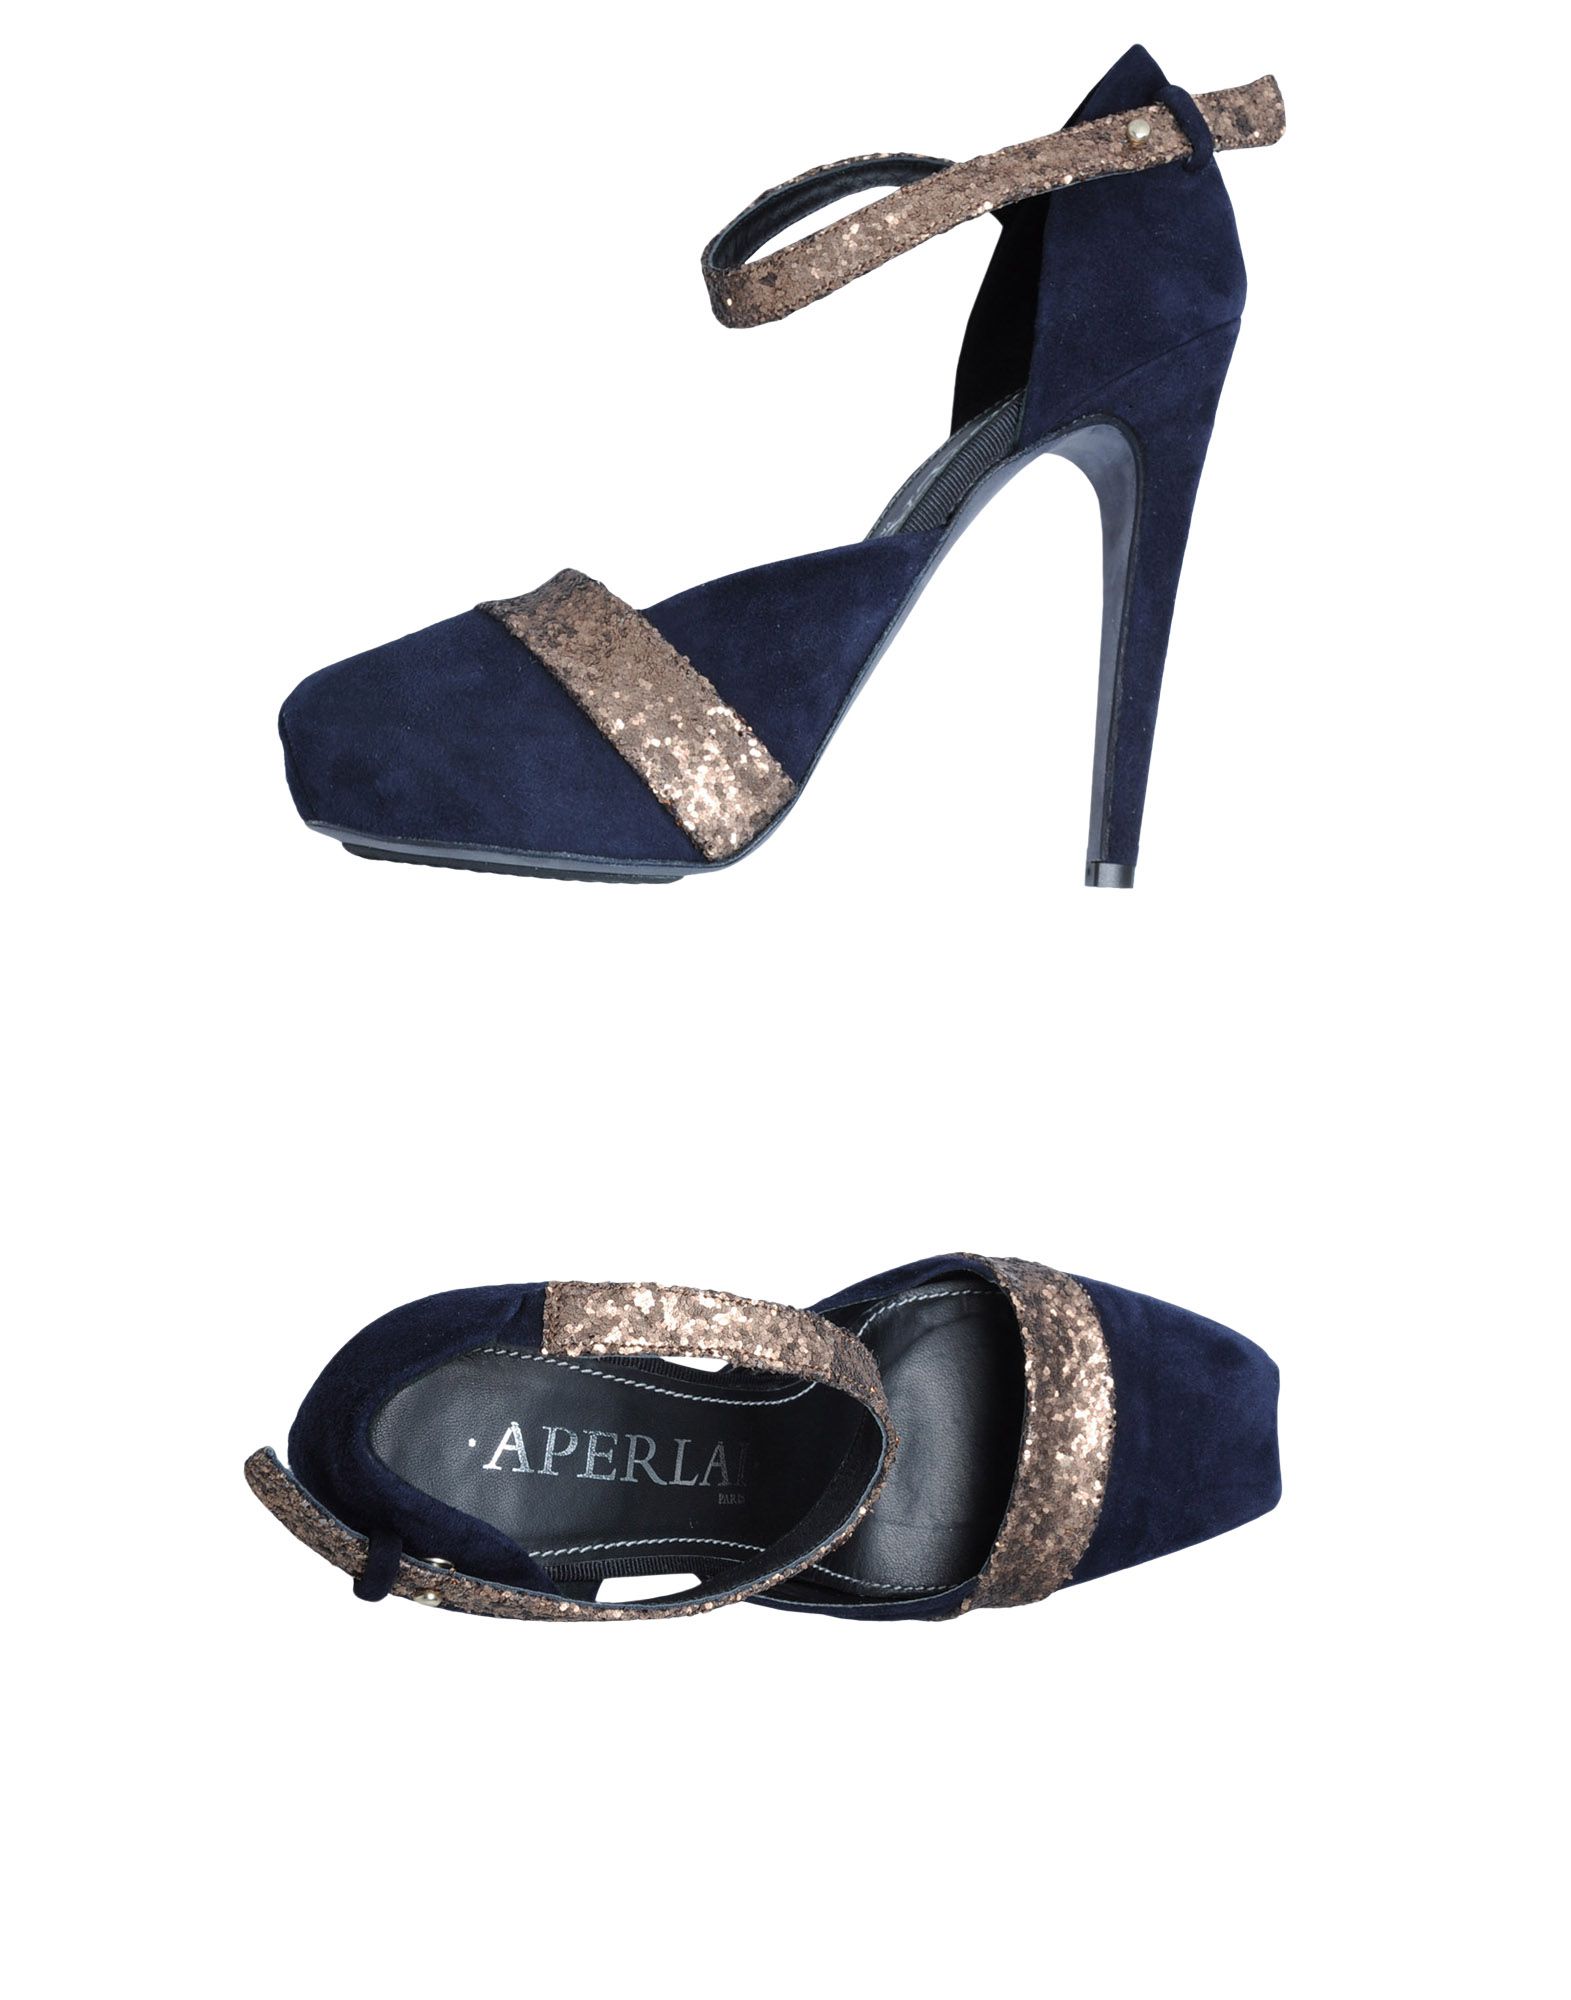 Foto Aperlai Zapatos De SalóN Plataforma Mujer Azul oscuro foto 637453